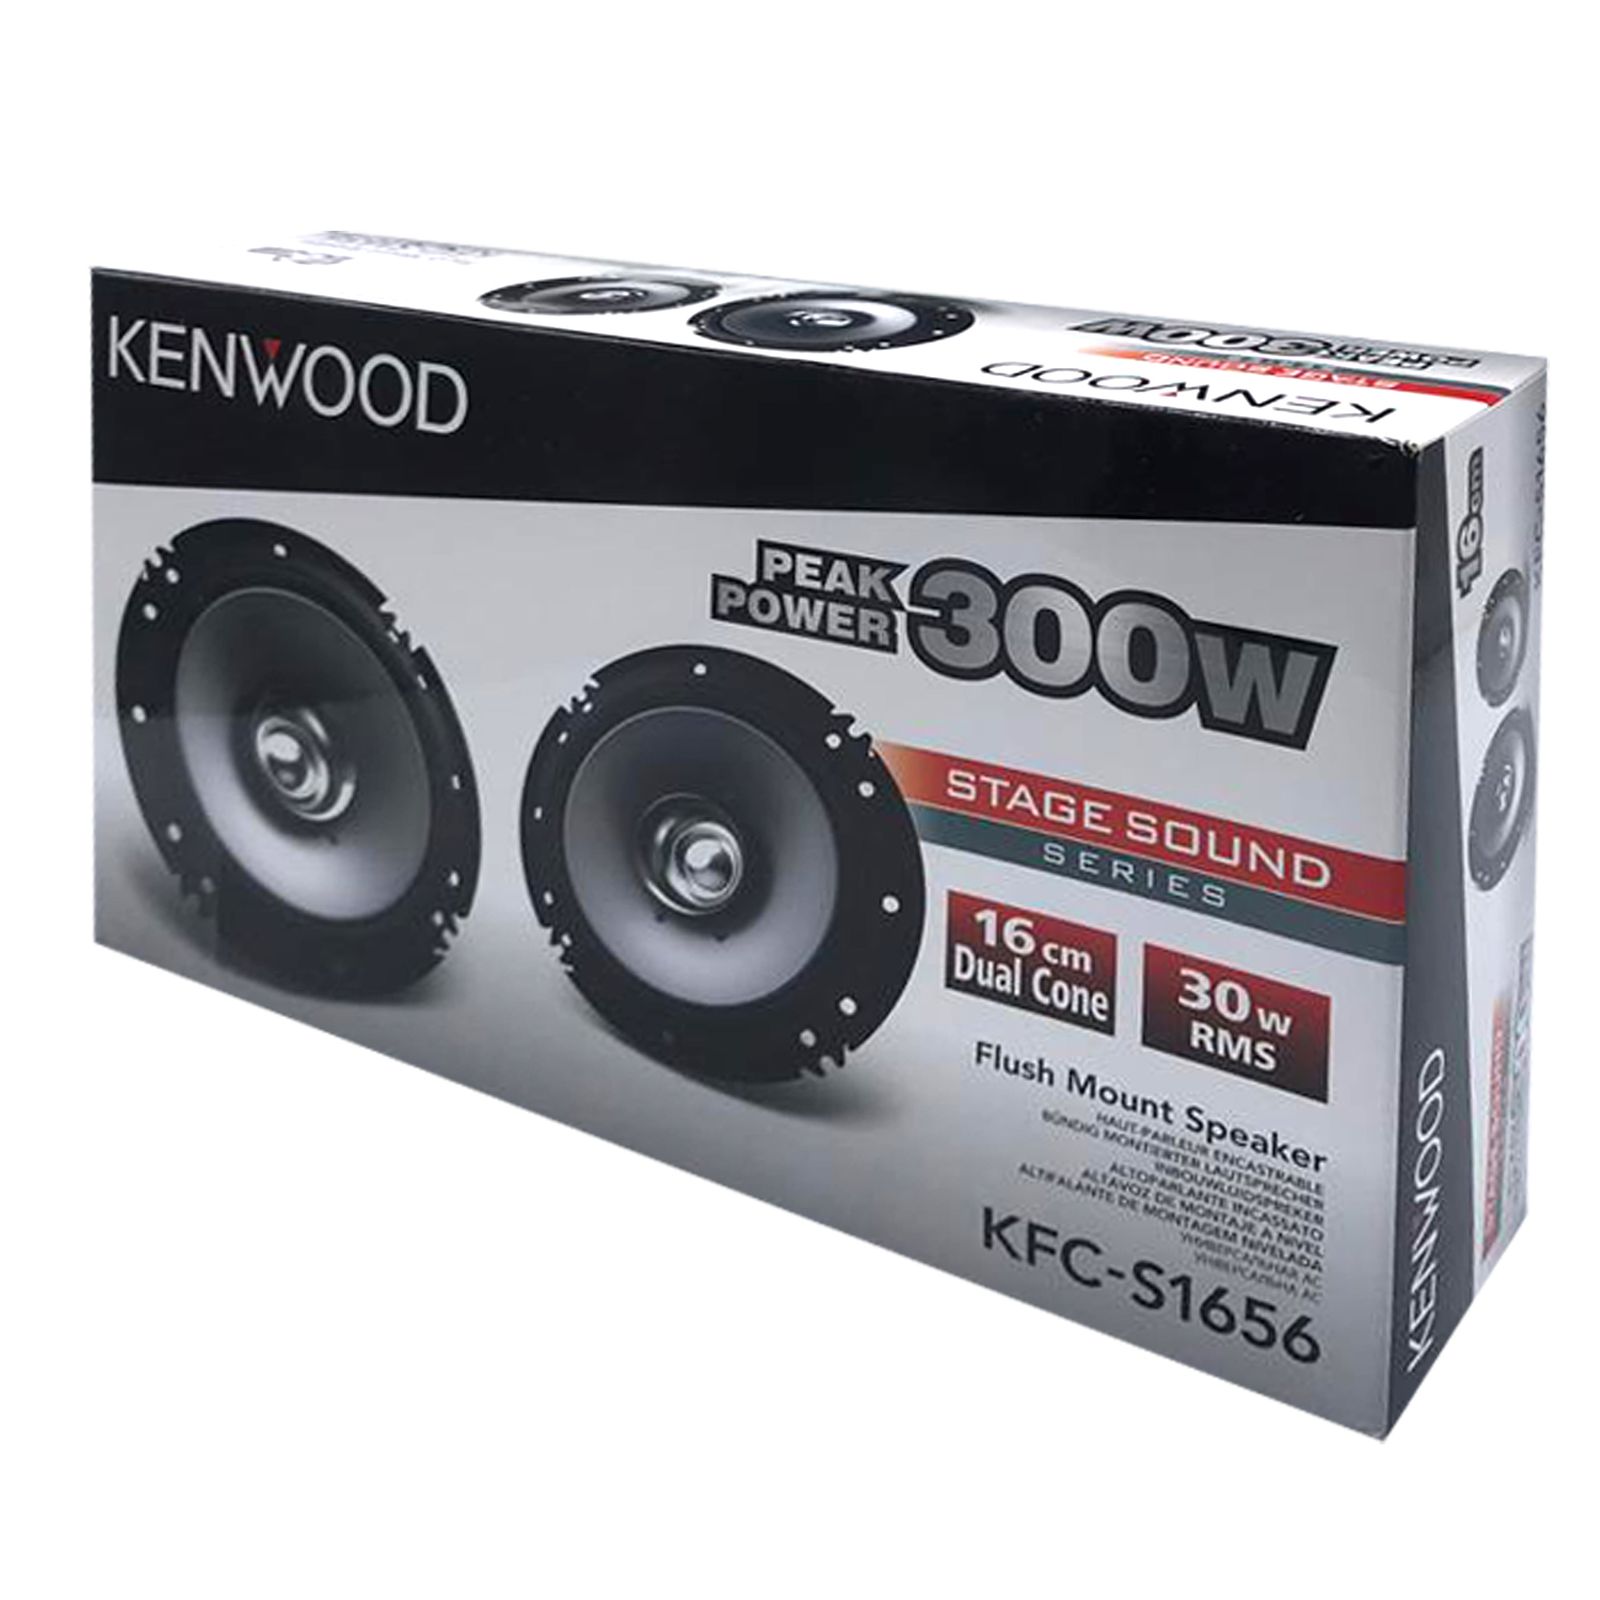 kenwood kfc w3010 короб